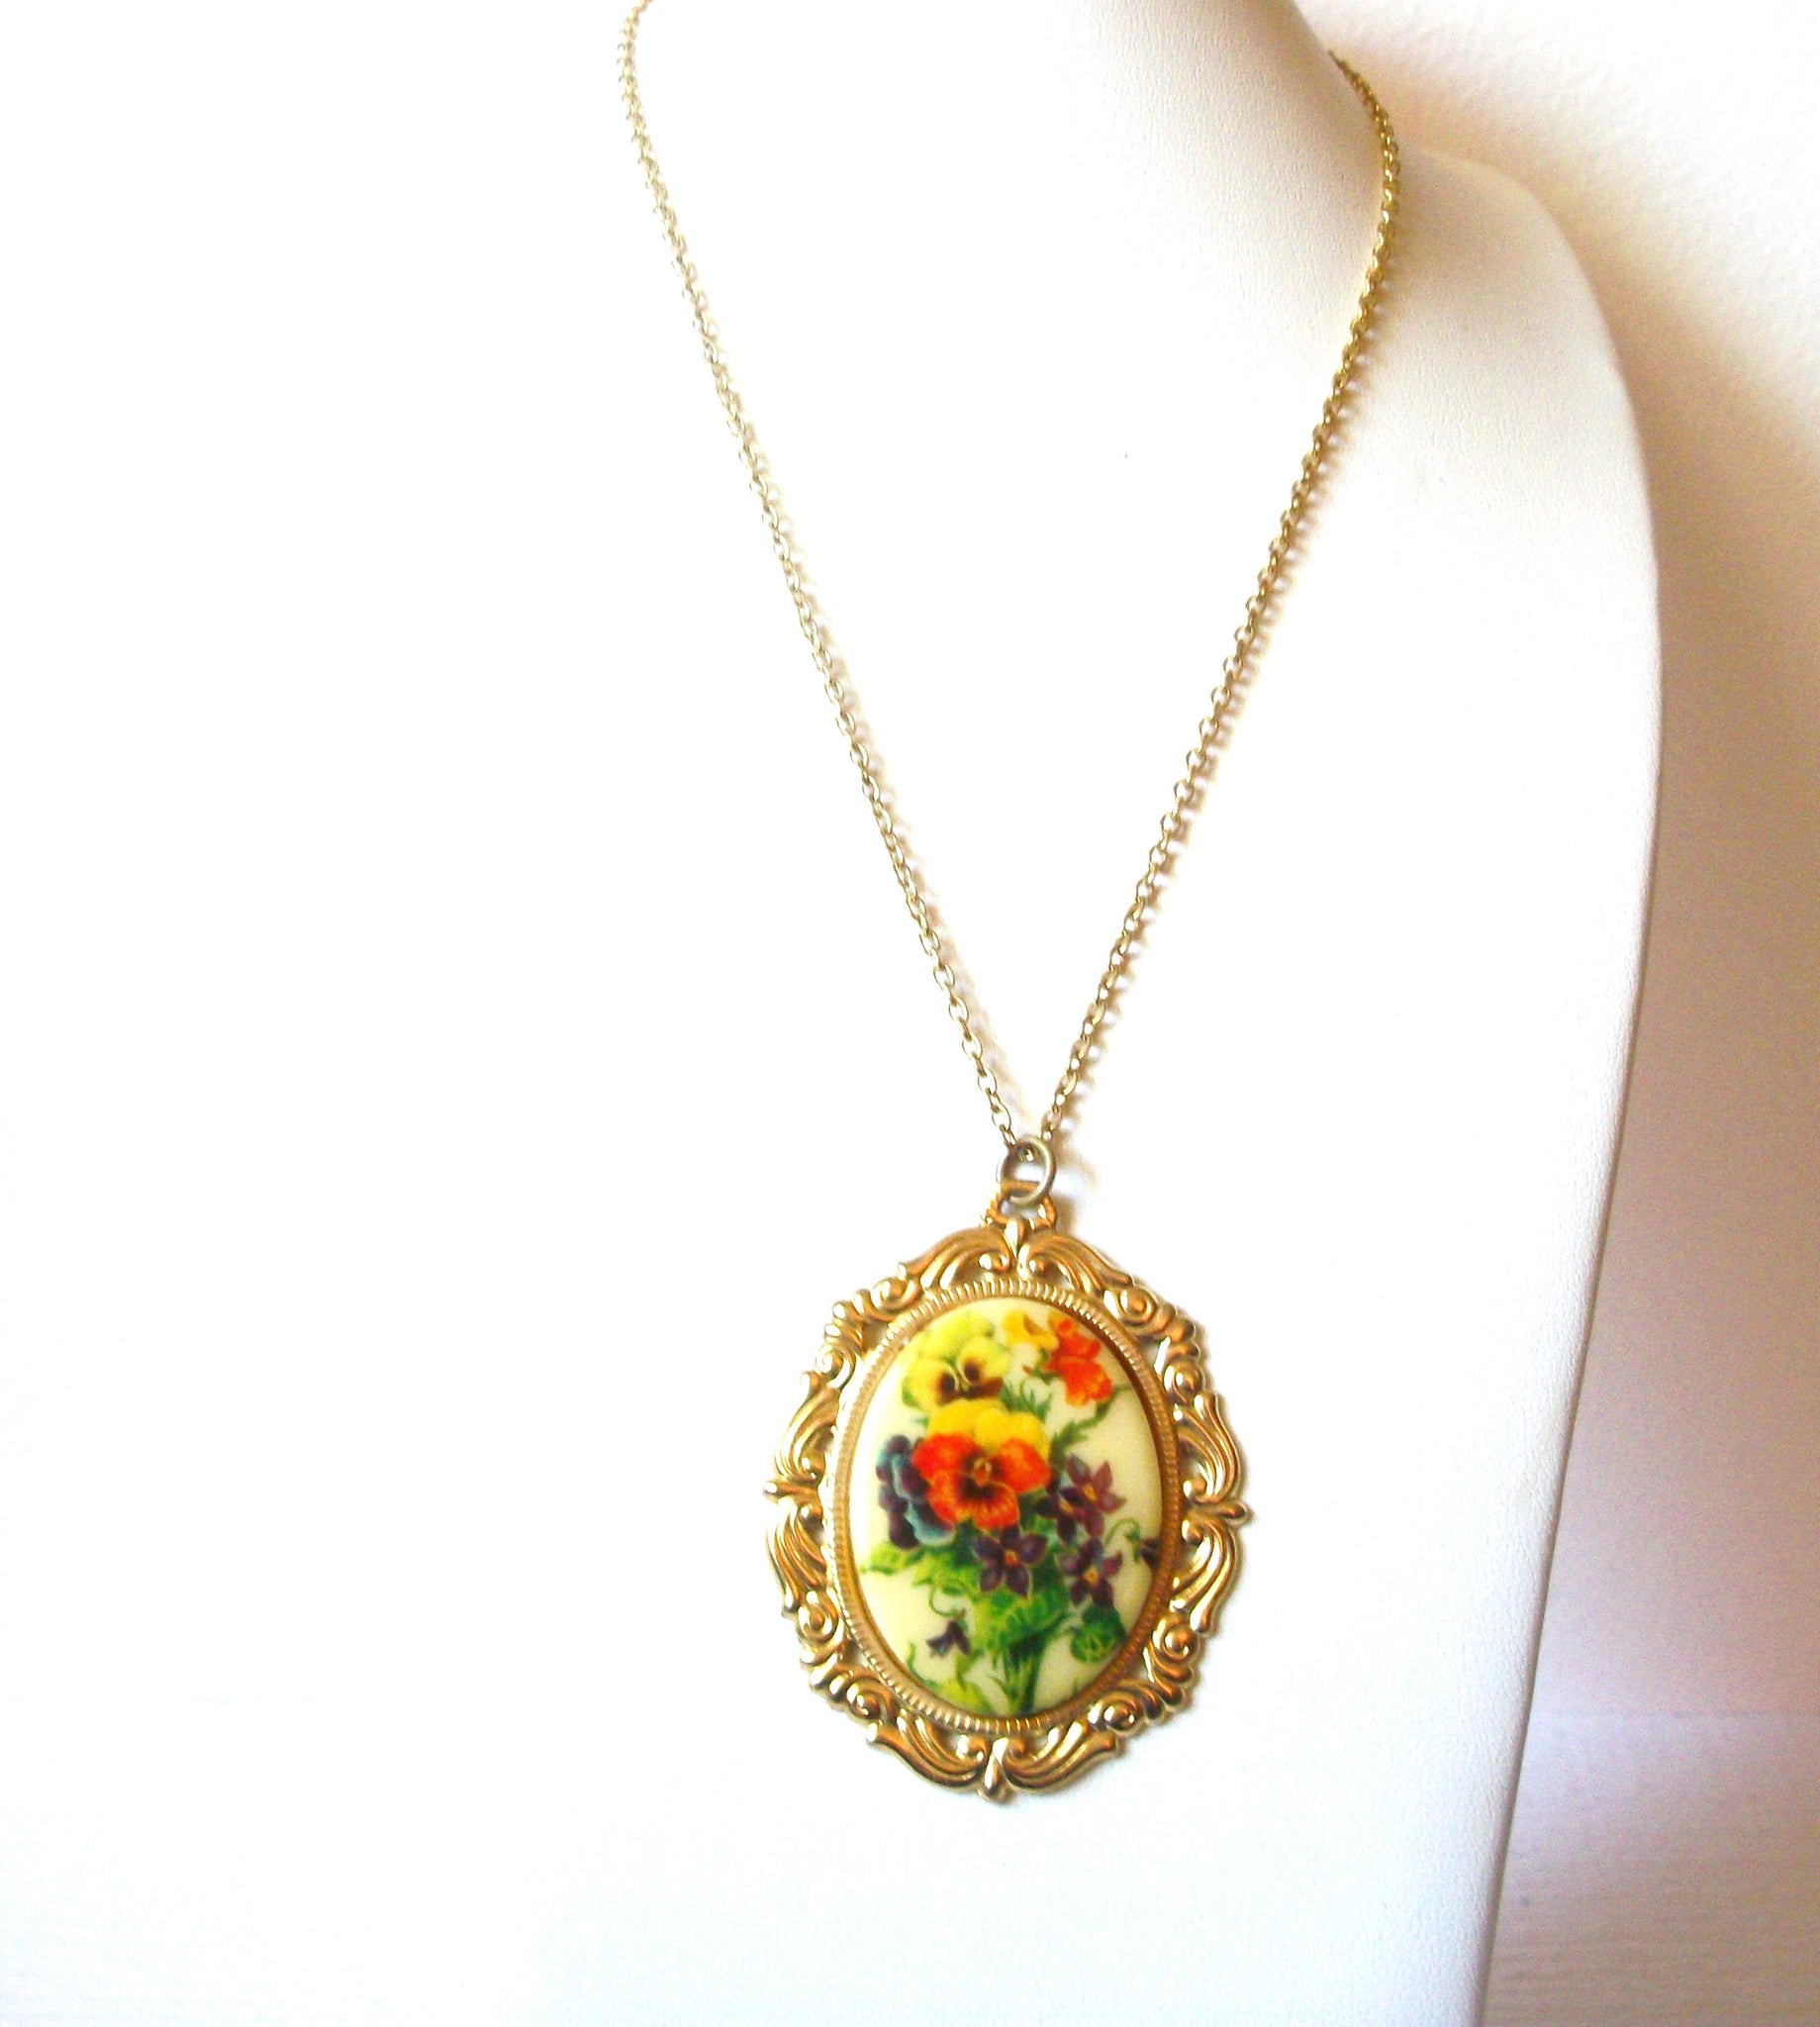 Vintage 1950s Gold Toned Flower Pendant Necklace 60116